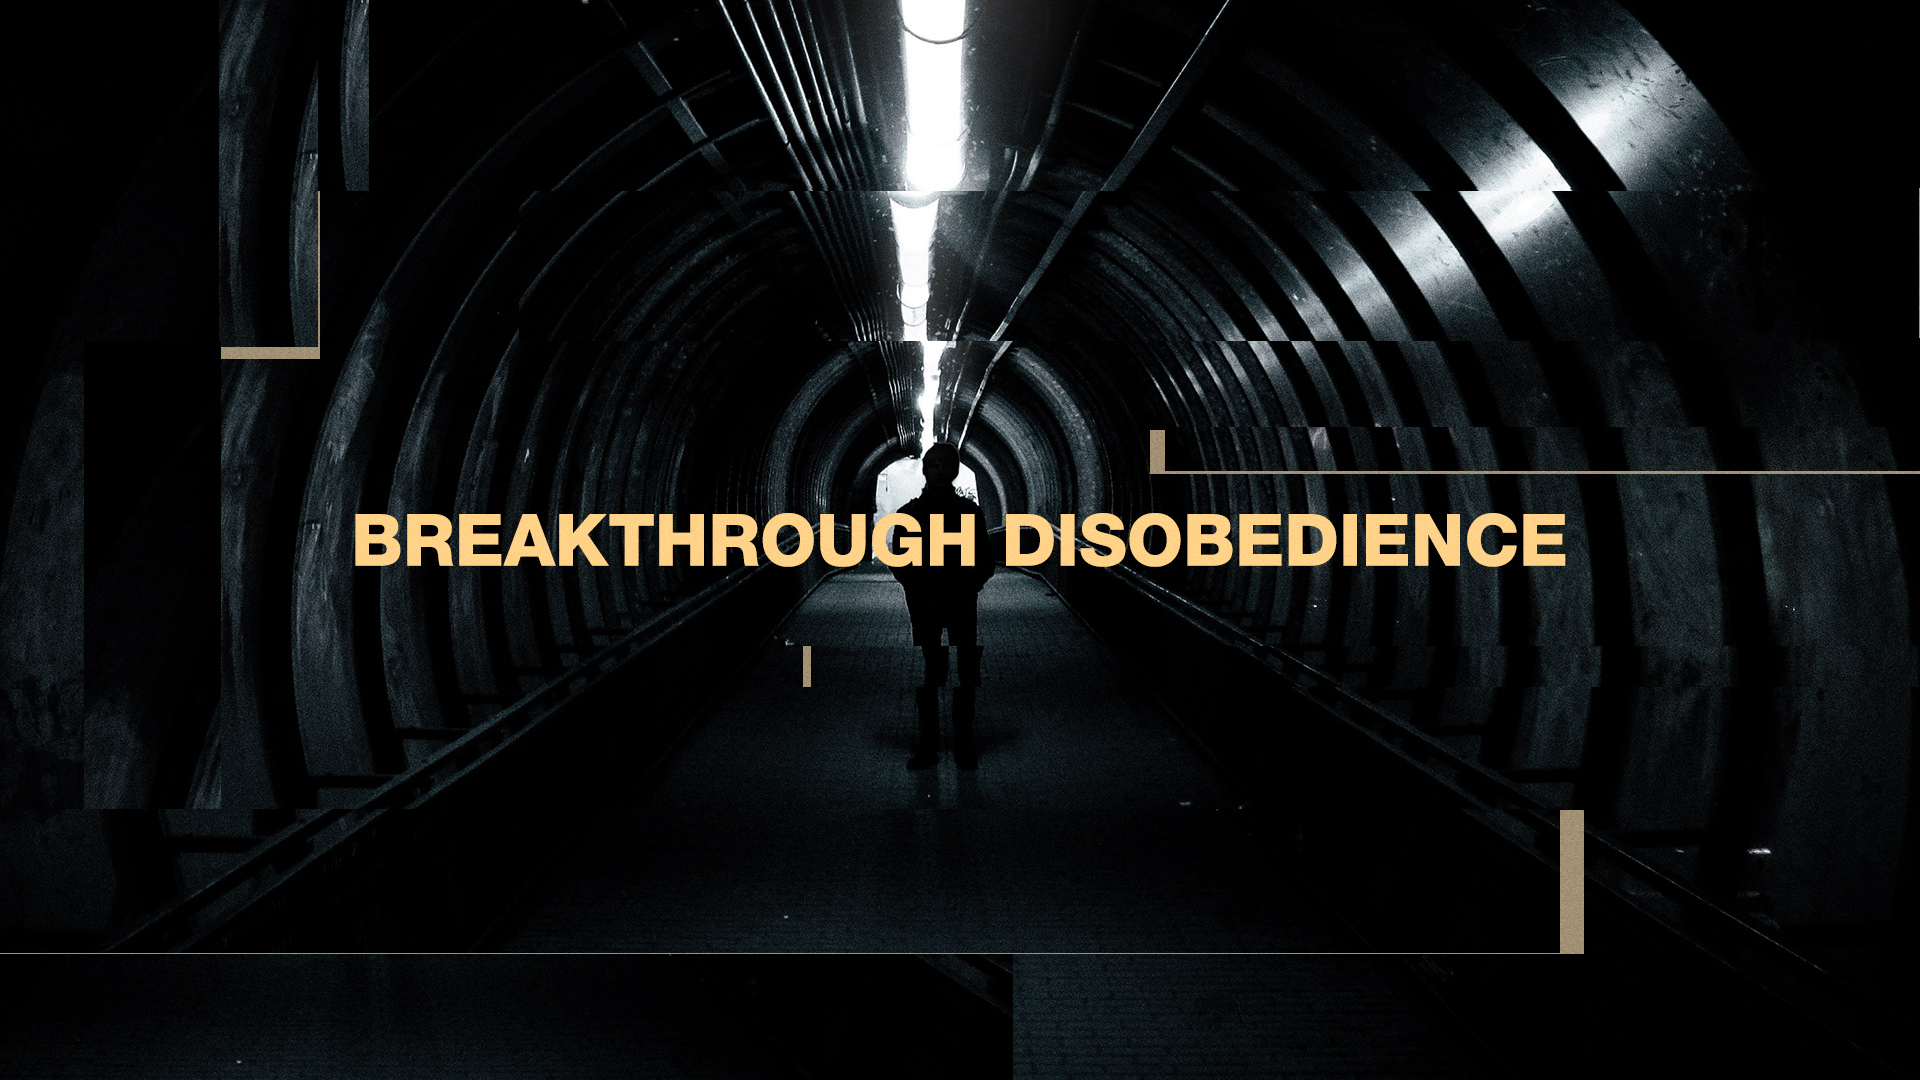 BreakThrough Disobedience